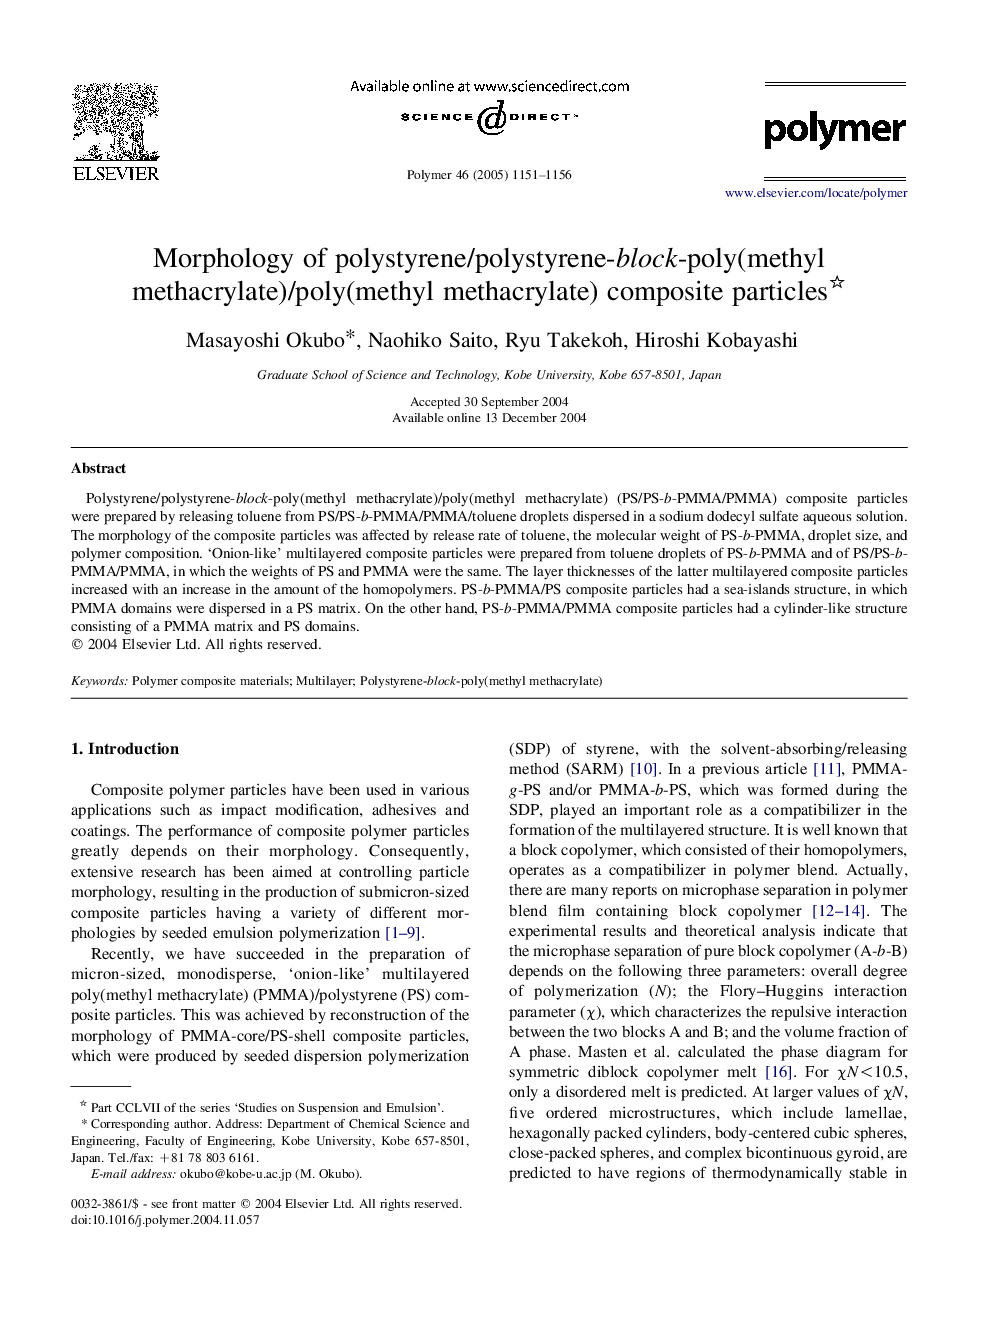 Morphology of polystyrene/polystyrene-block-poly(methyl methacrylate)/poly(methyl methacrylate) composite particles